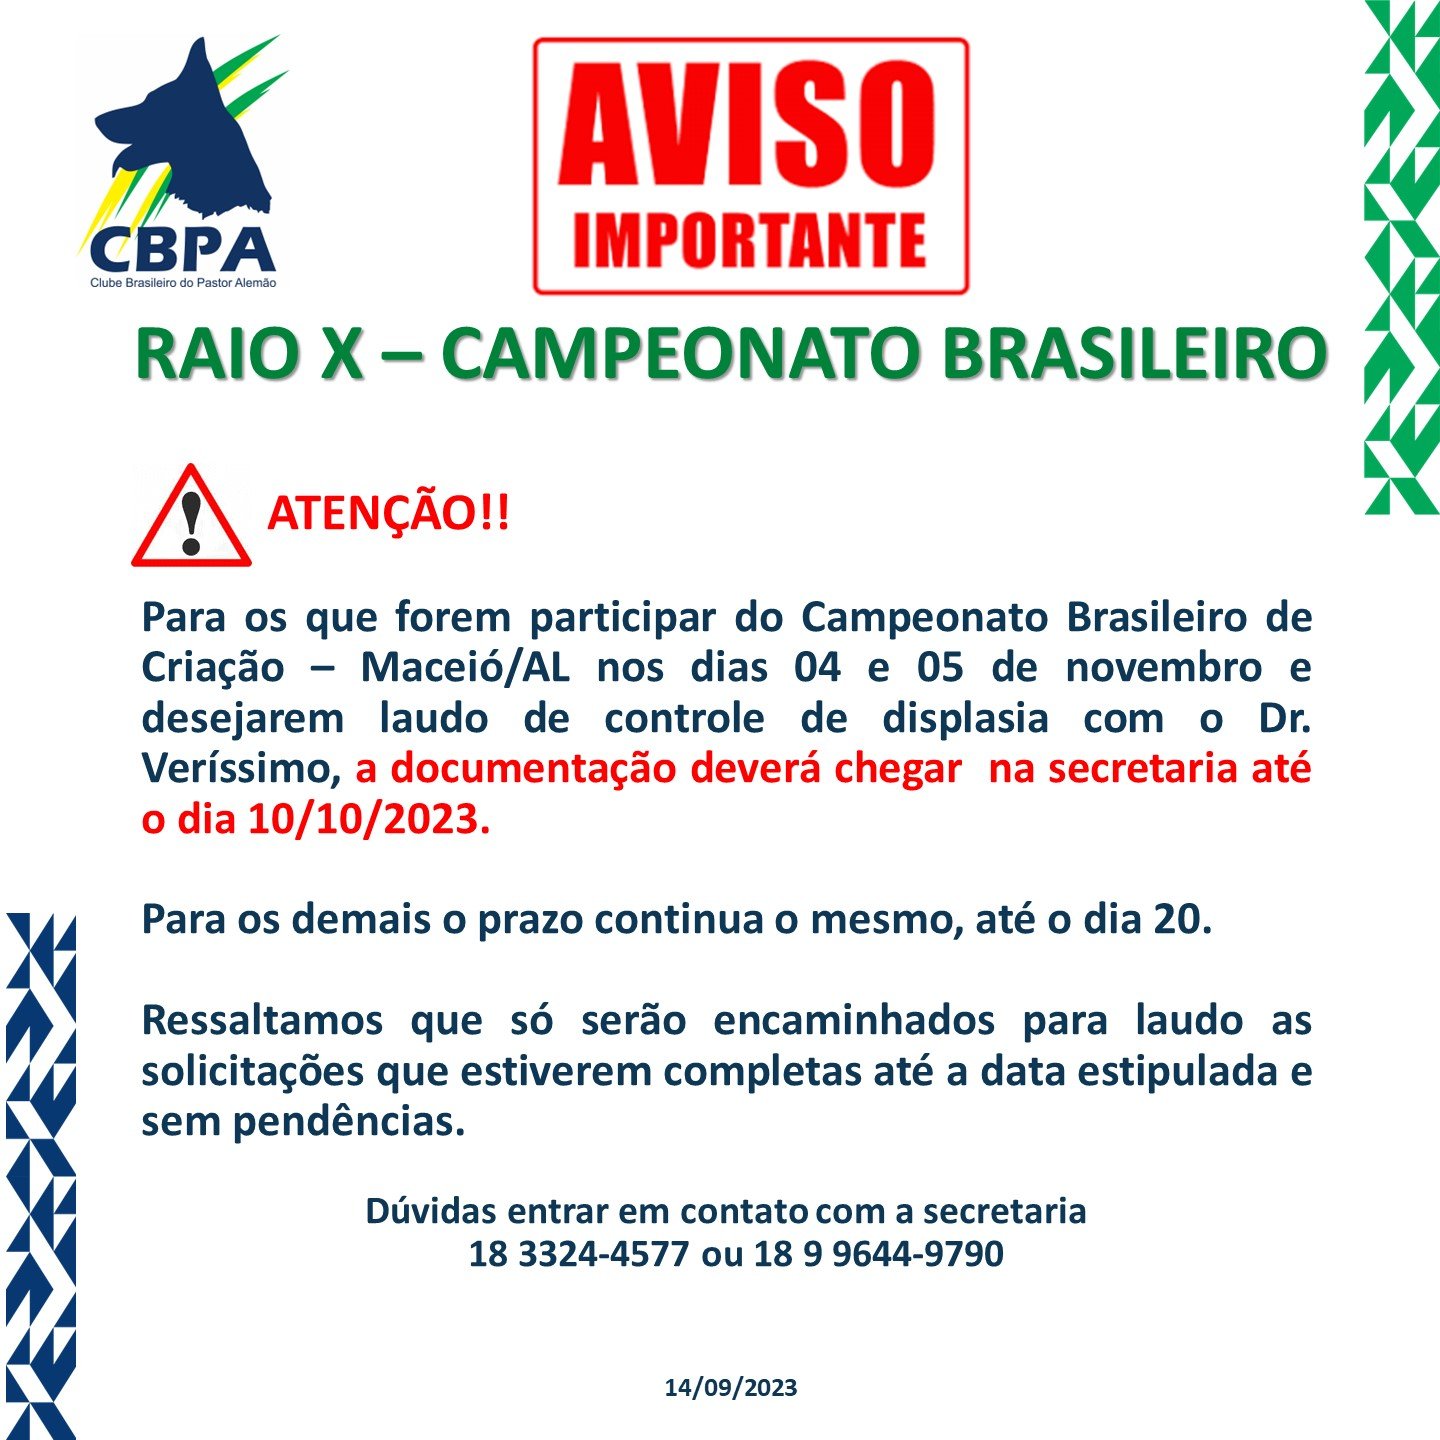 Raio X - Campeonato Brasileiro